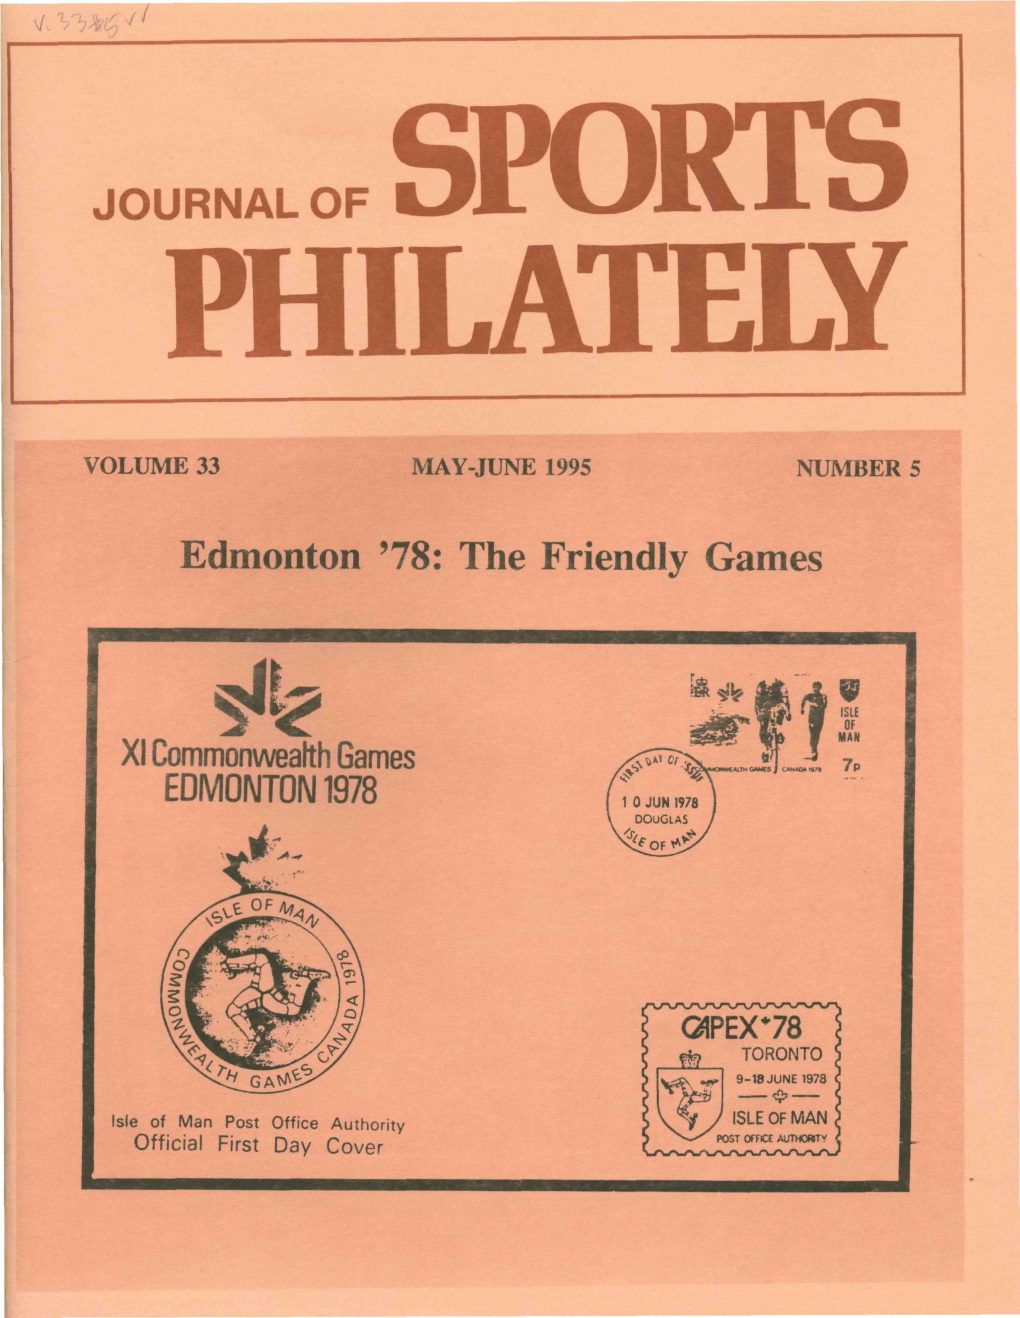 Edmonton '78: the Friendly Games